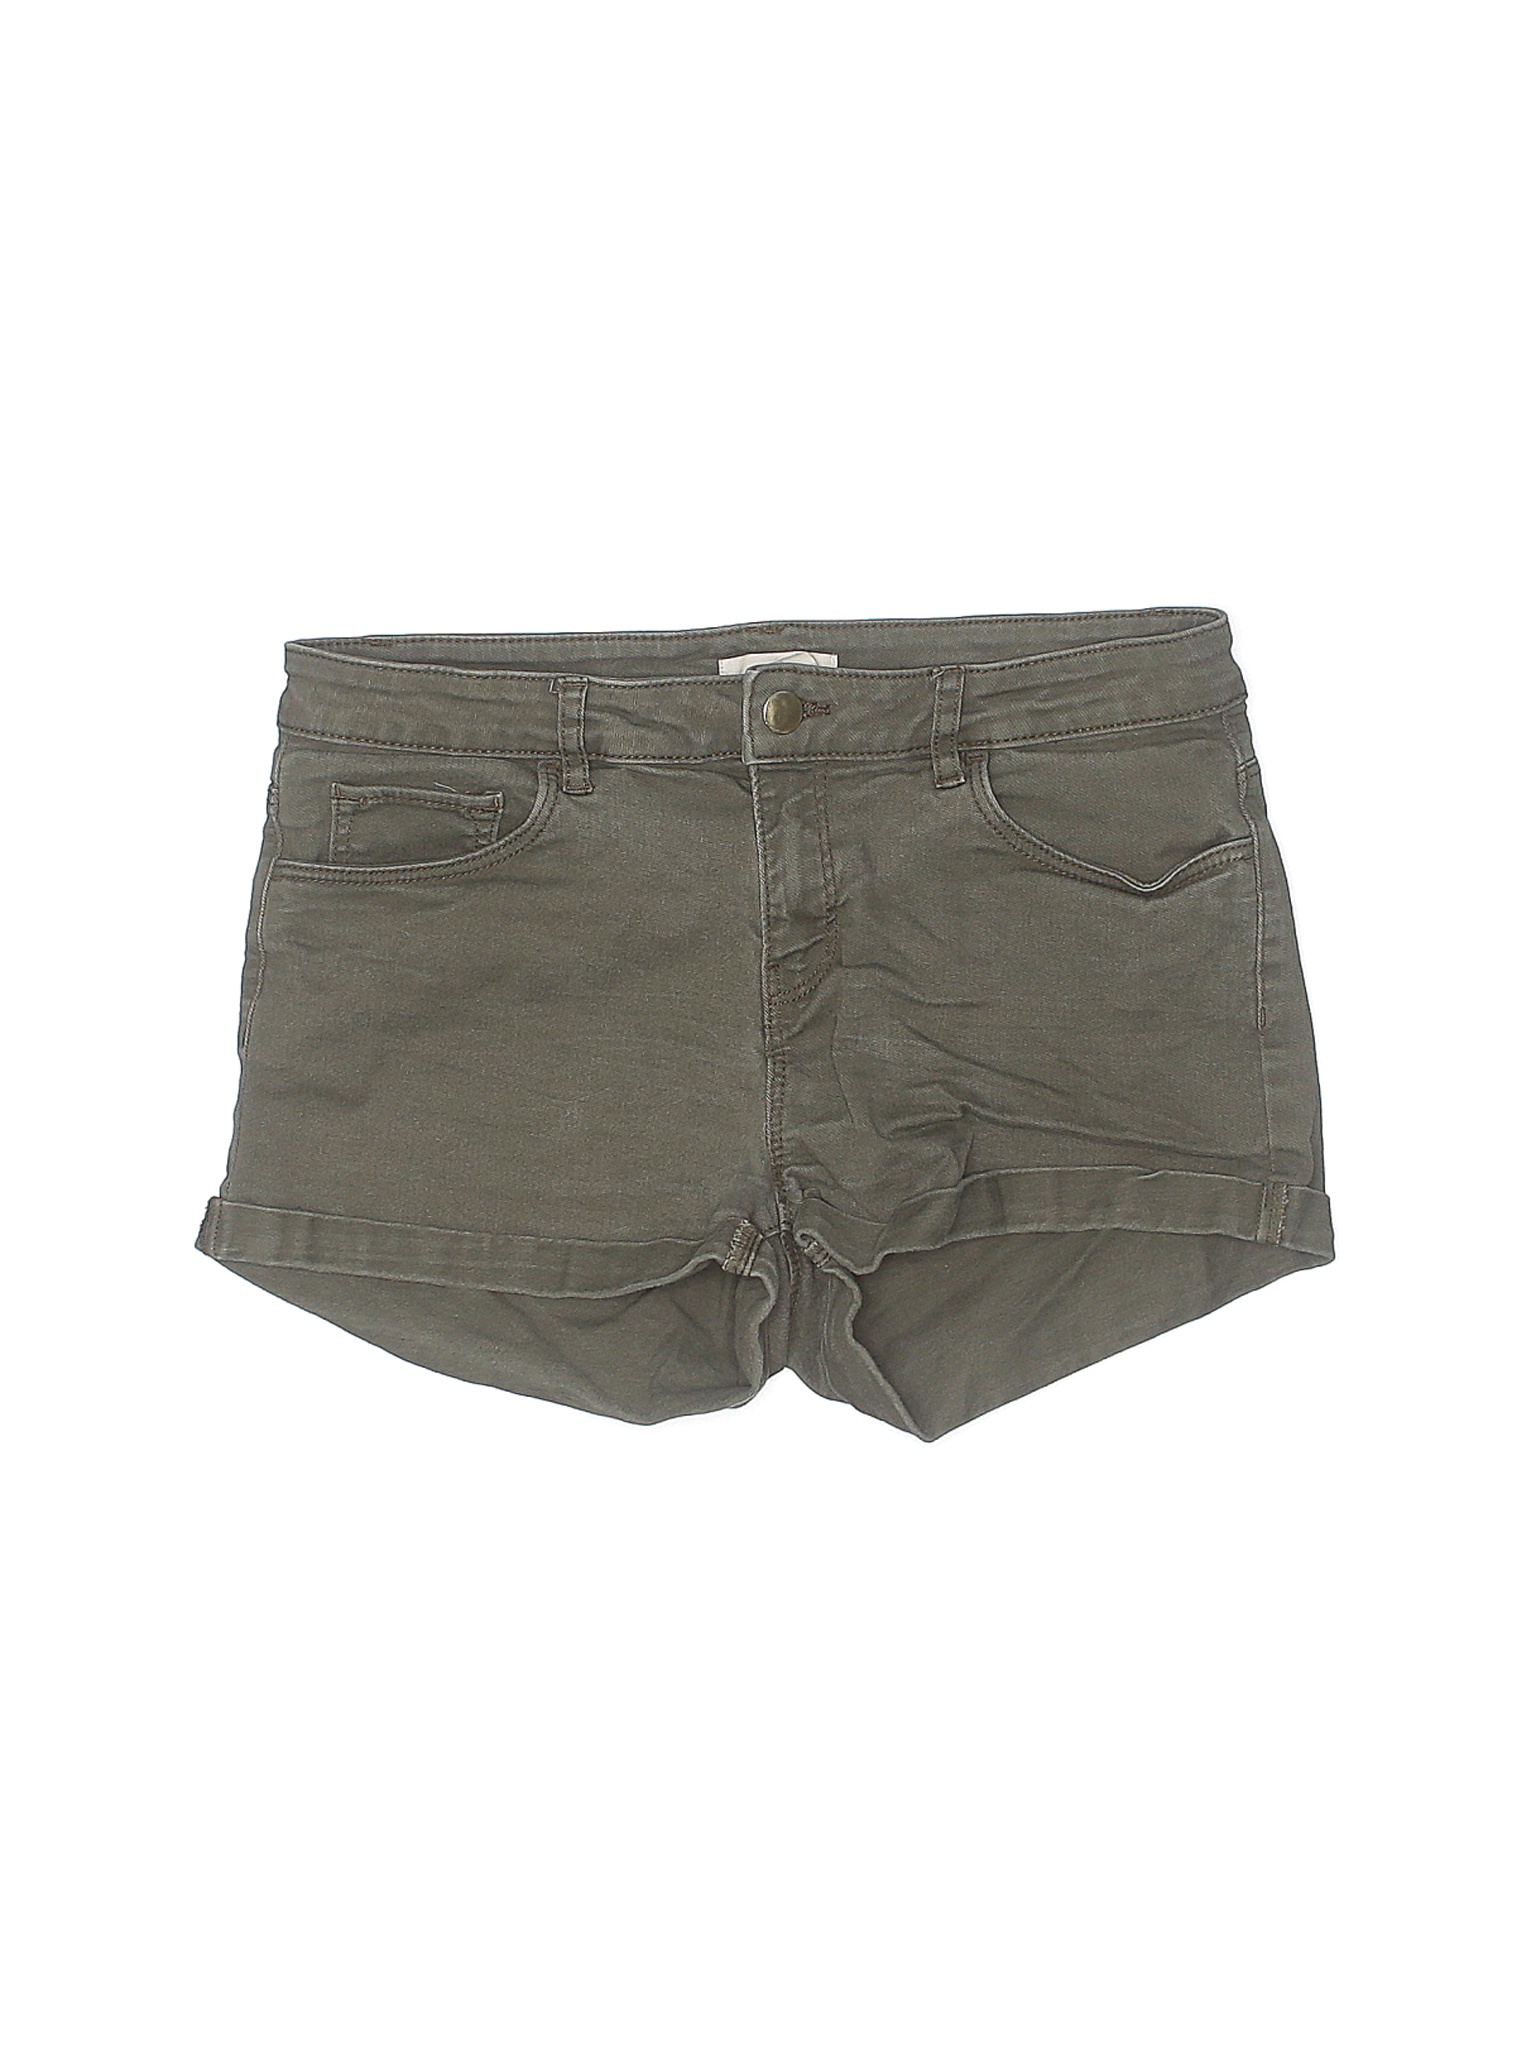 H&M Women Green Denim Shorts 6 | eBay